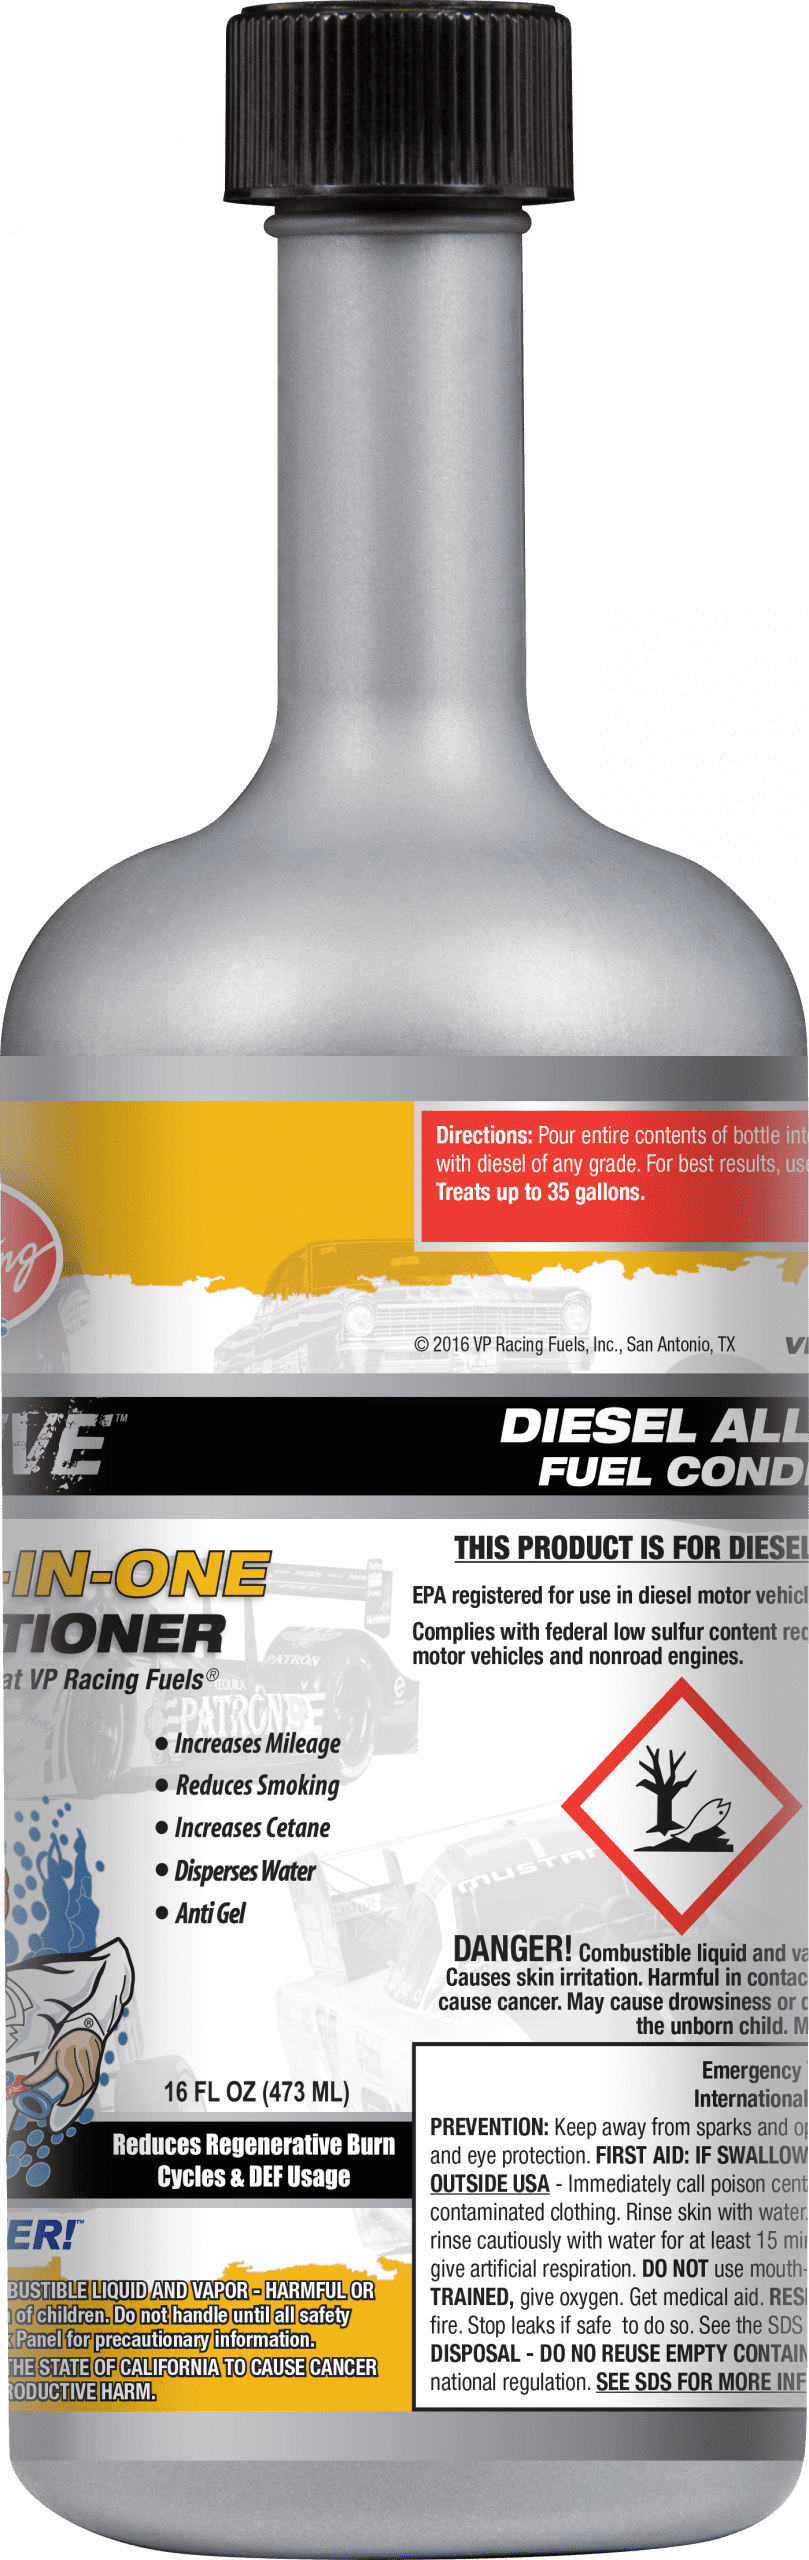 High-Performance Diesel Fuel Additives